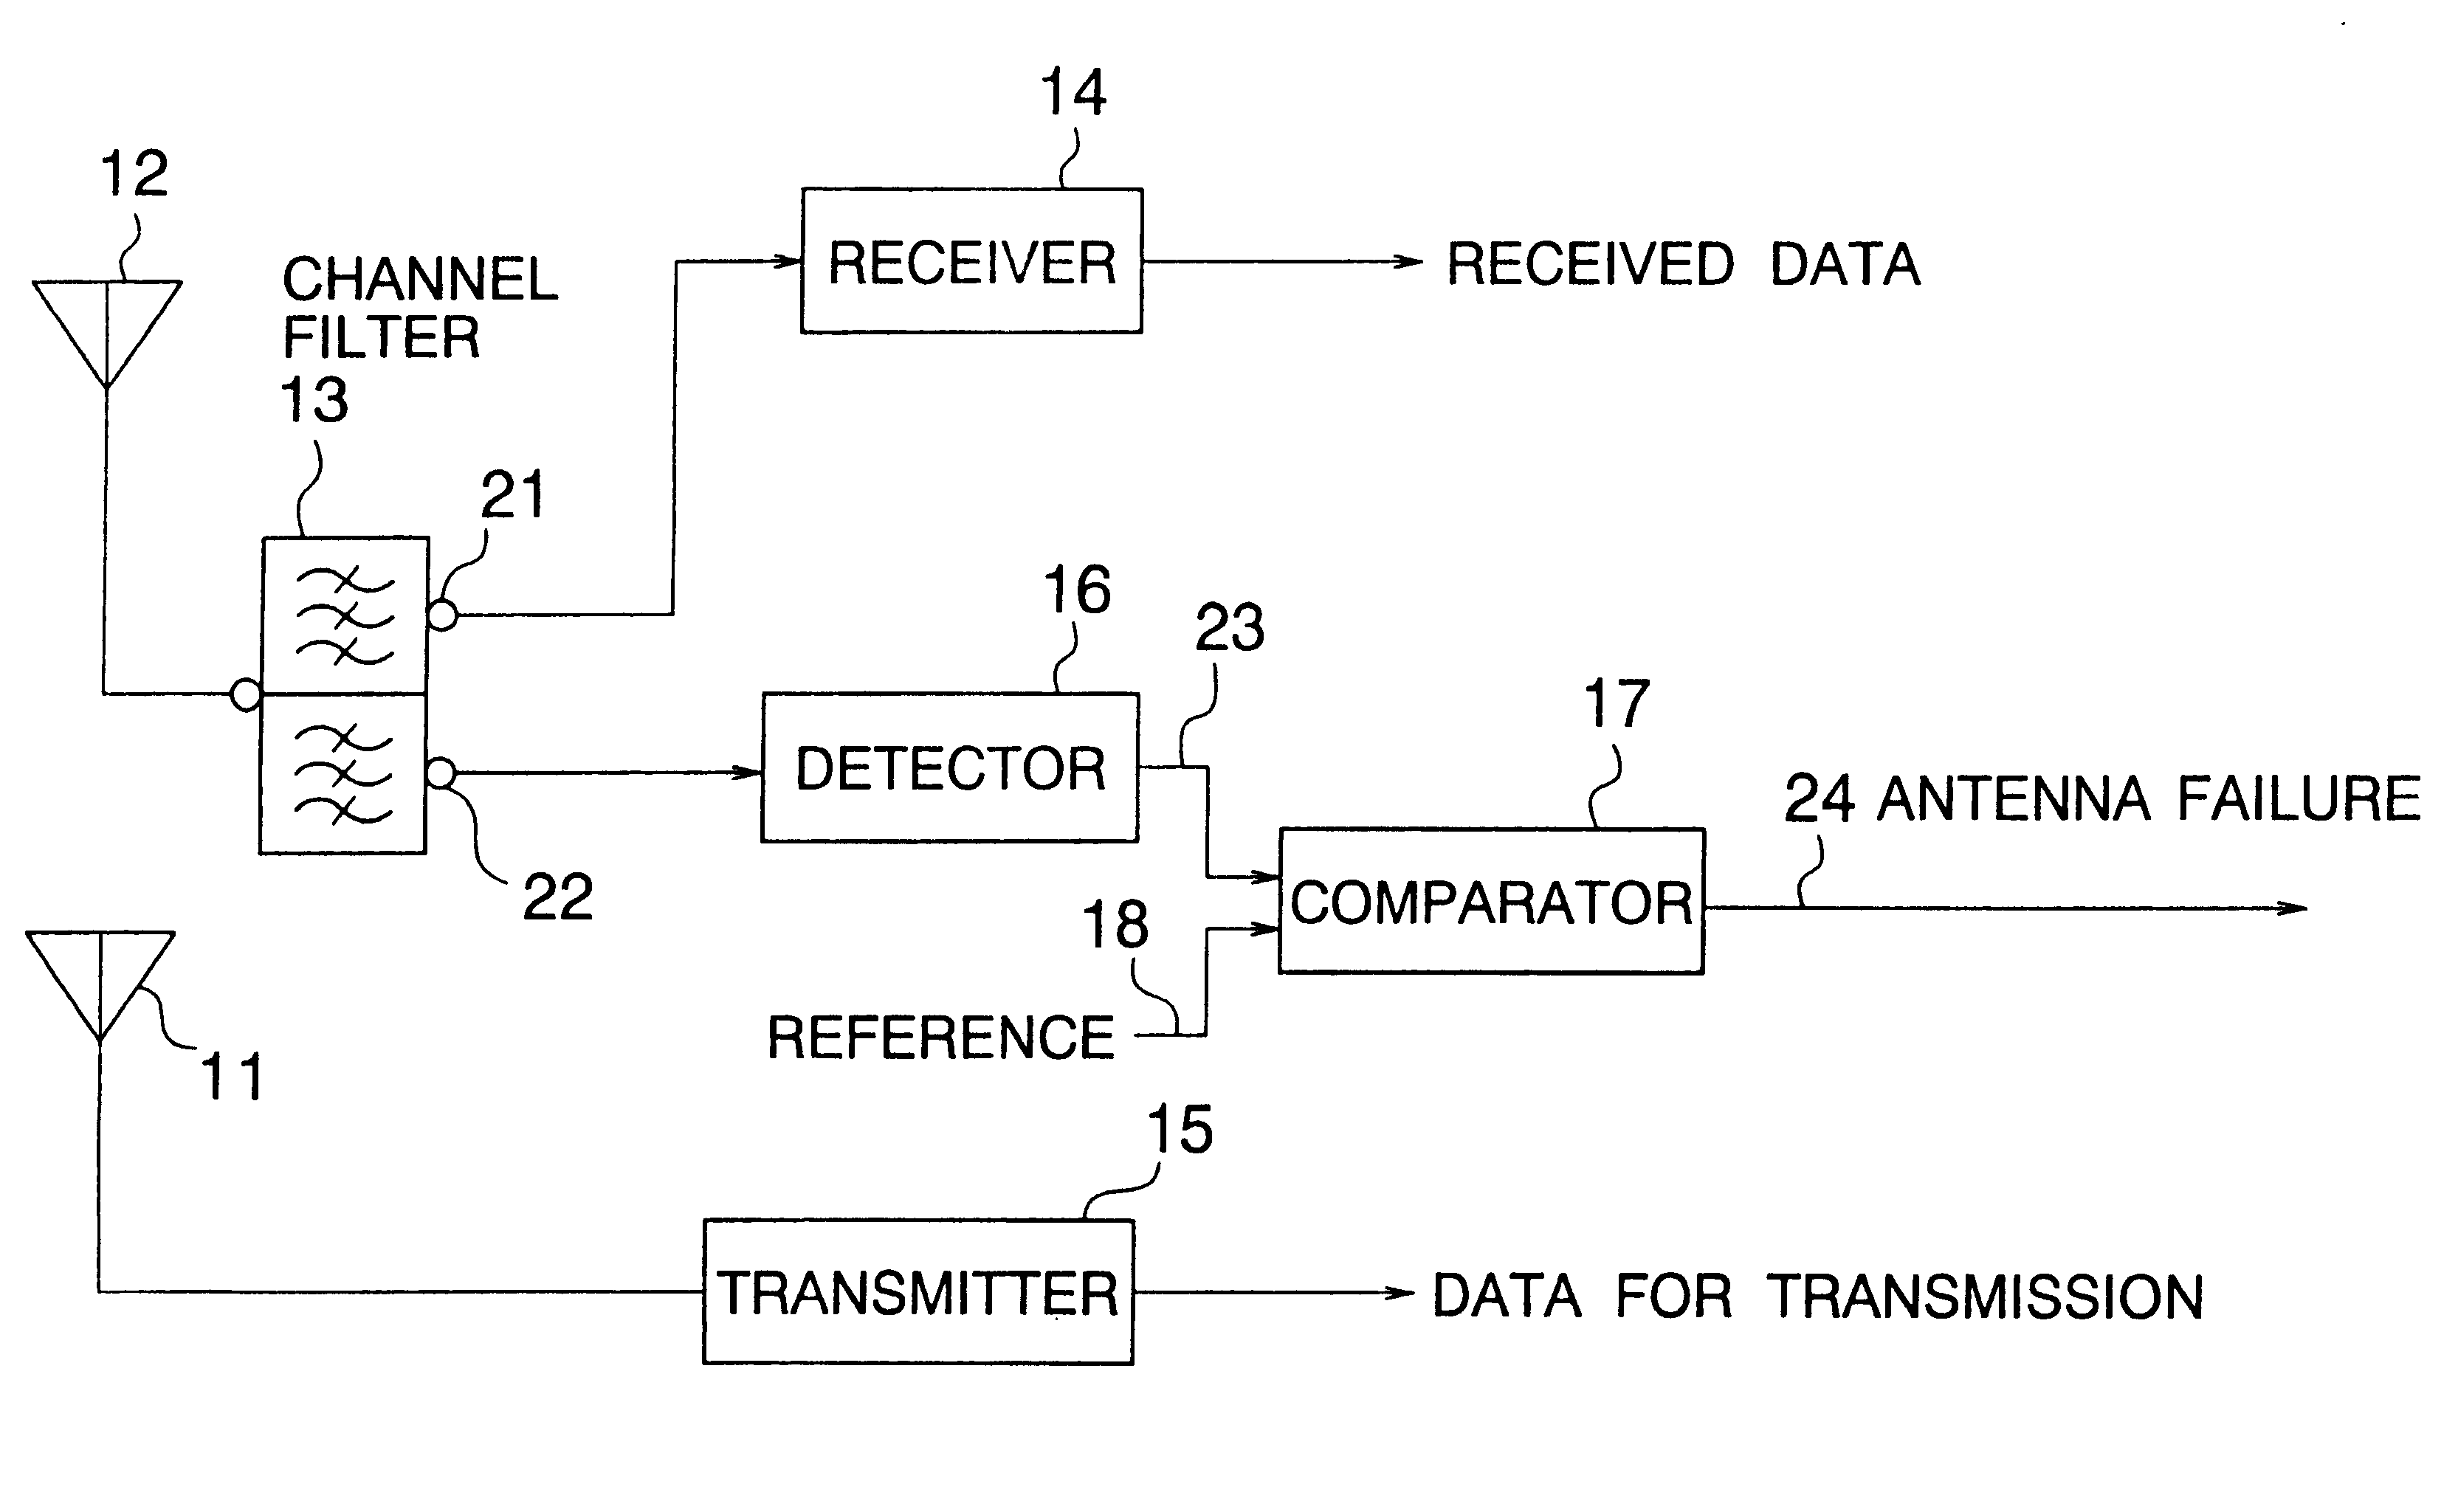 Transmitter/receiver having an antenna failure detection system